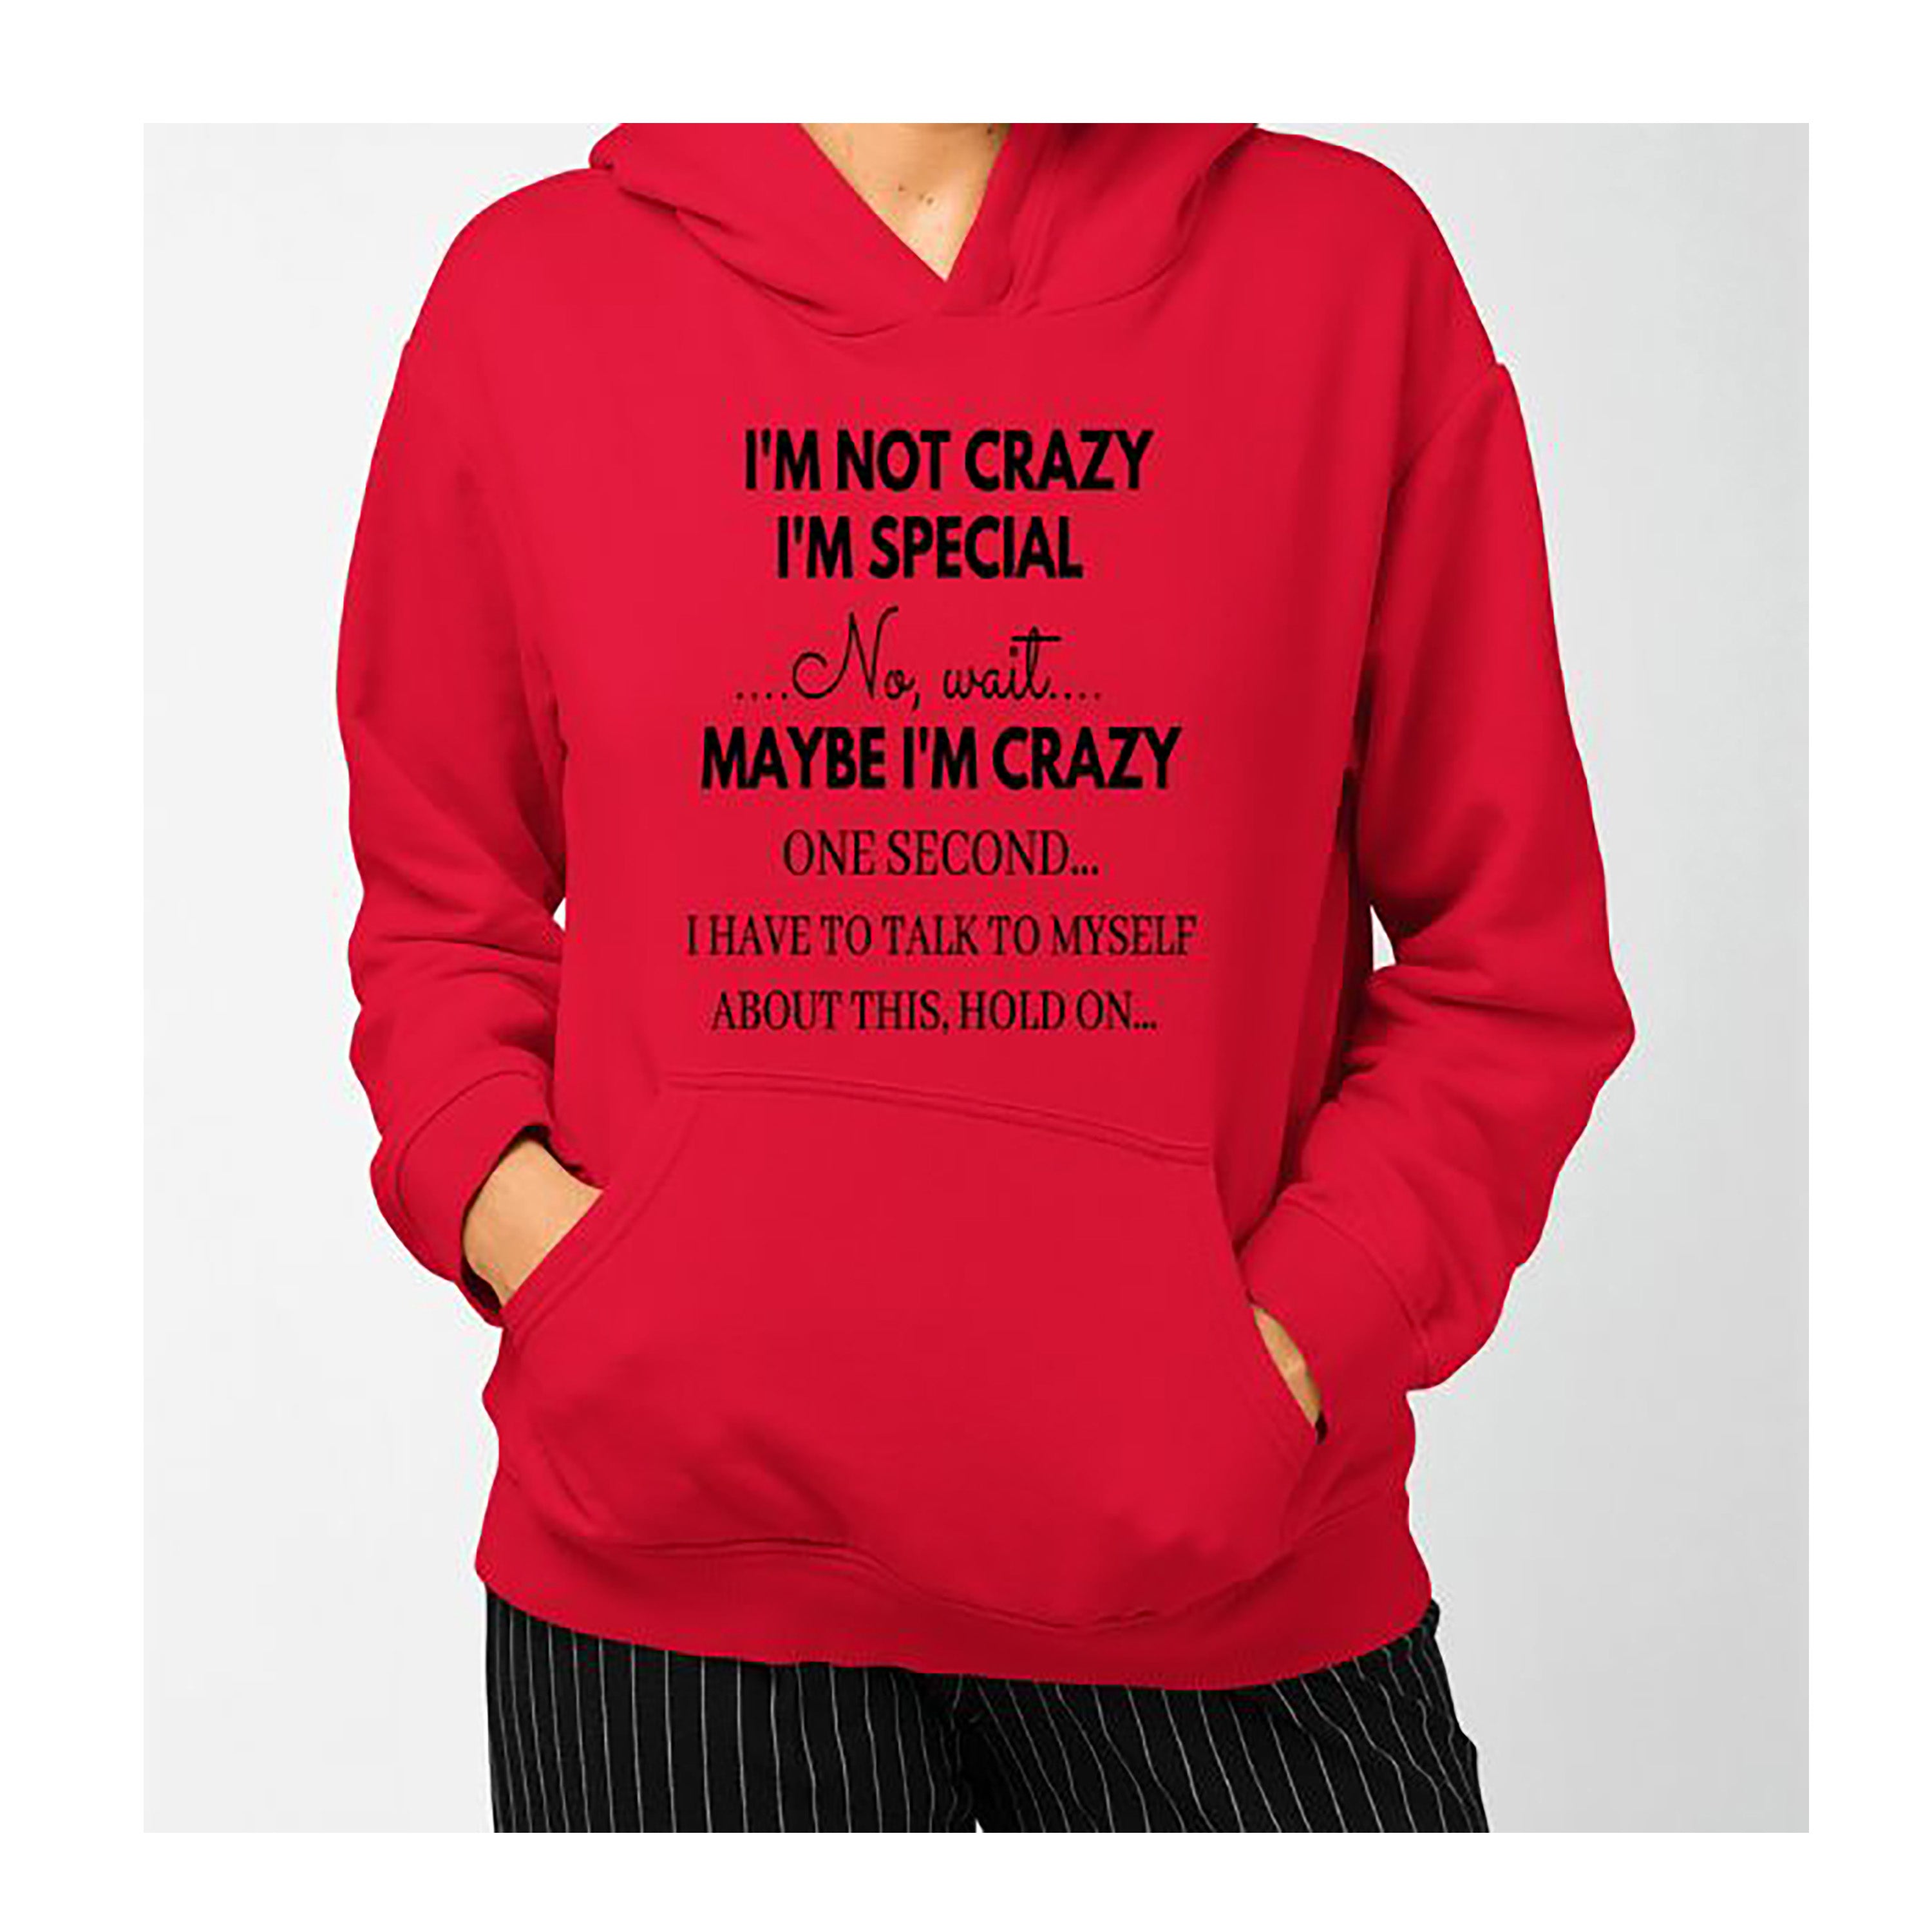 "I M NOT CRAZY I AM SPECIAL" Hoodie & Sweatshirt (Black Design)